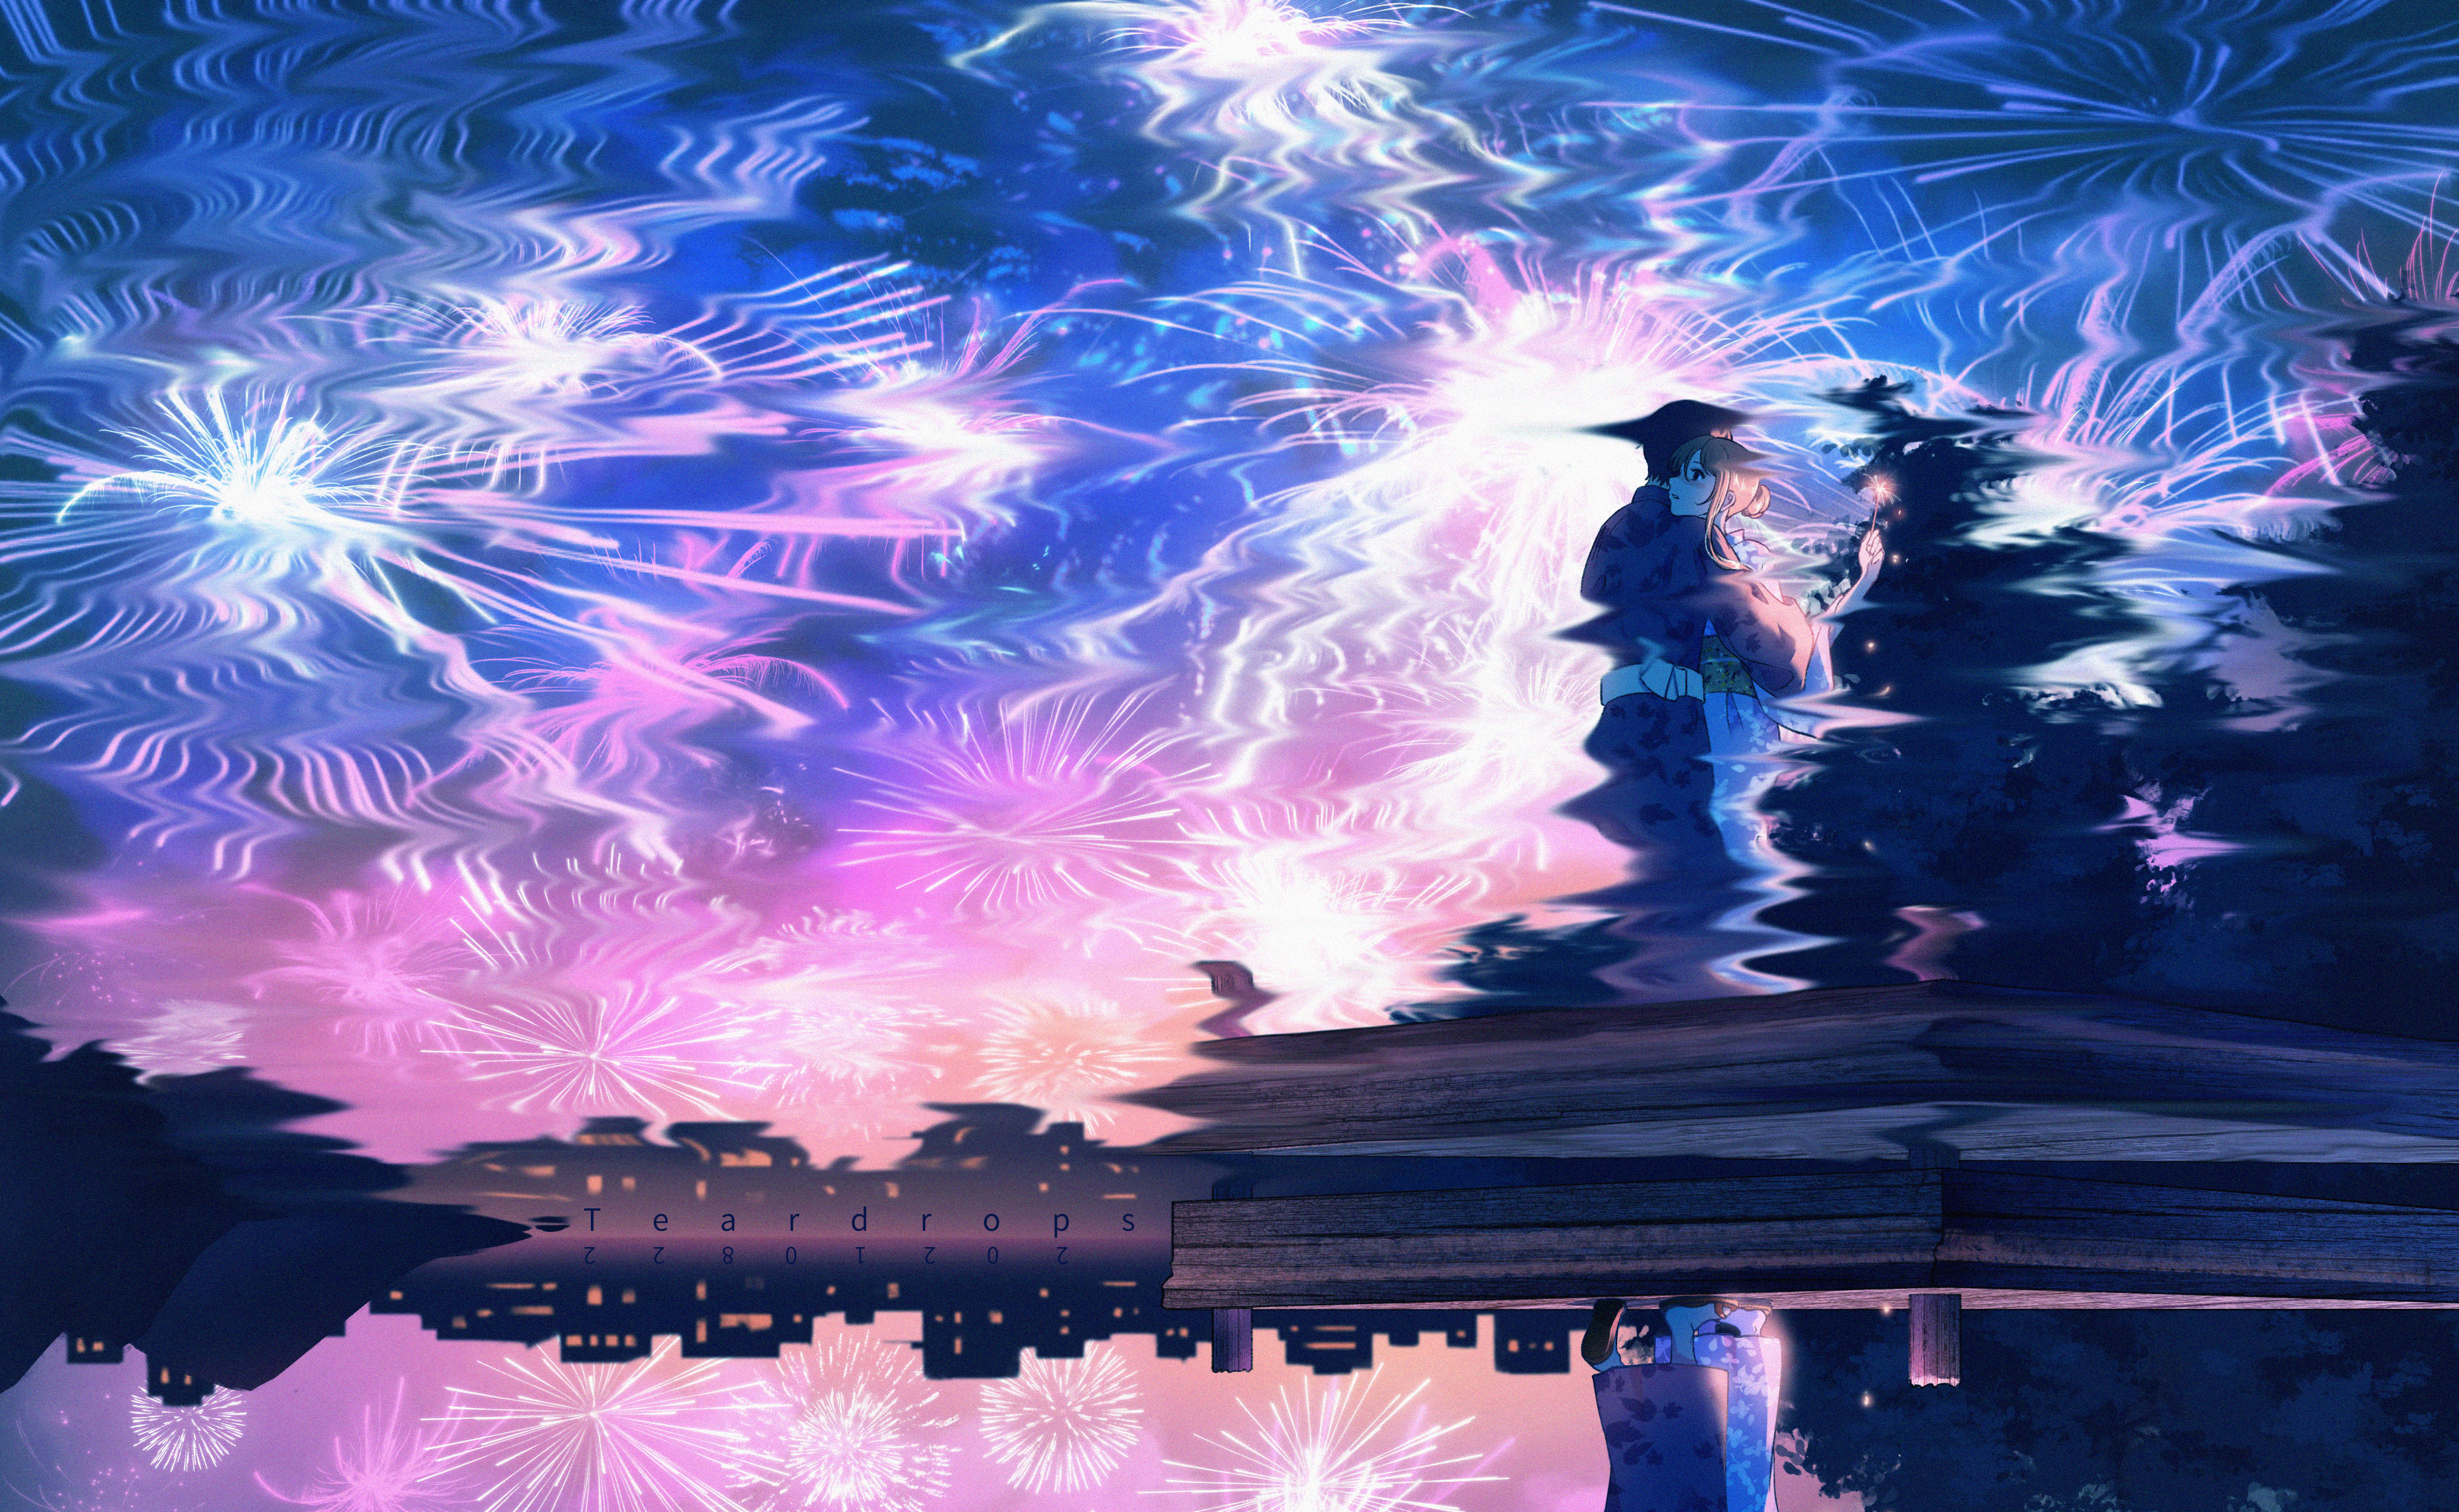 Anime Anime Girls Fireworks Hugging Hairbun Vaporwave Standing Reflection Jetty Water Sky Night Anim 4066x2500